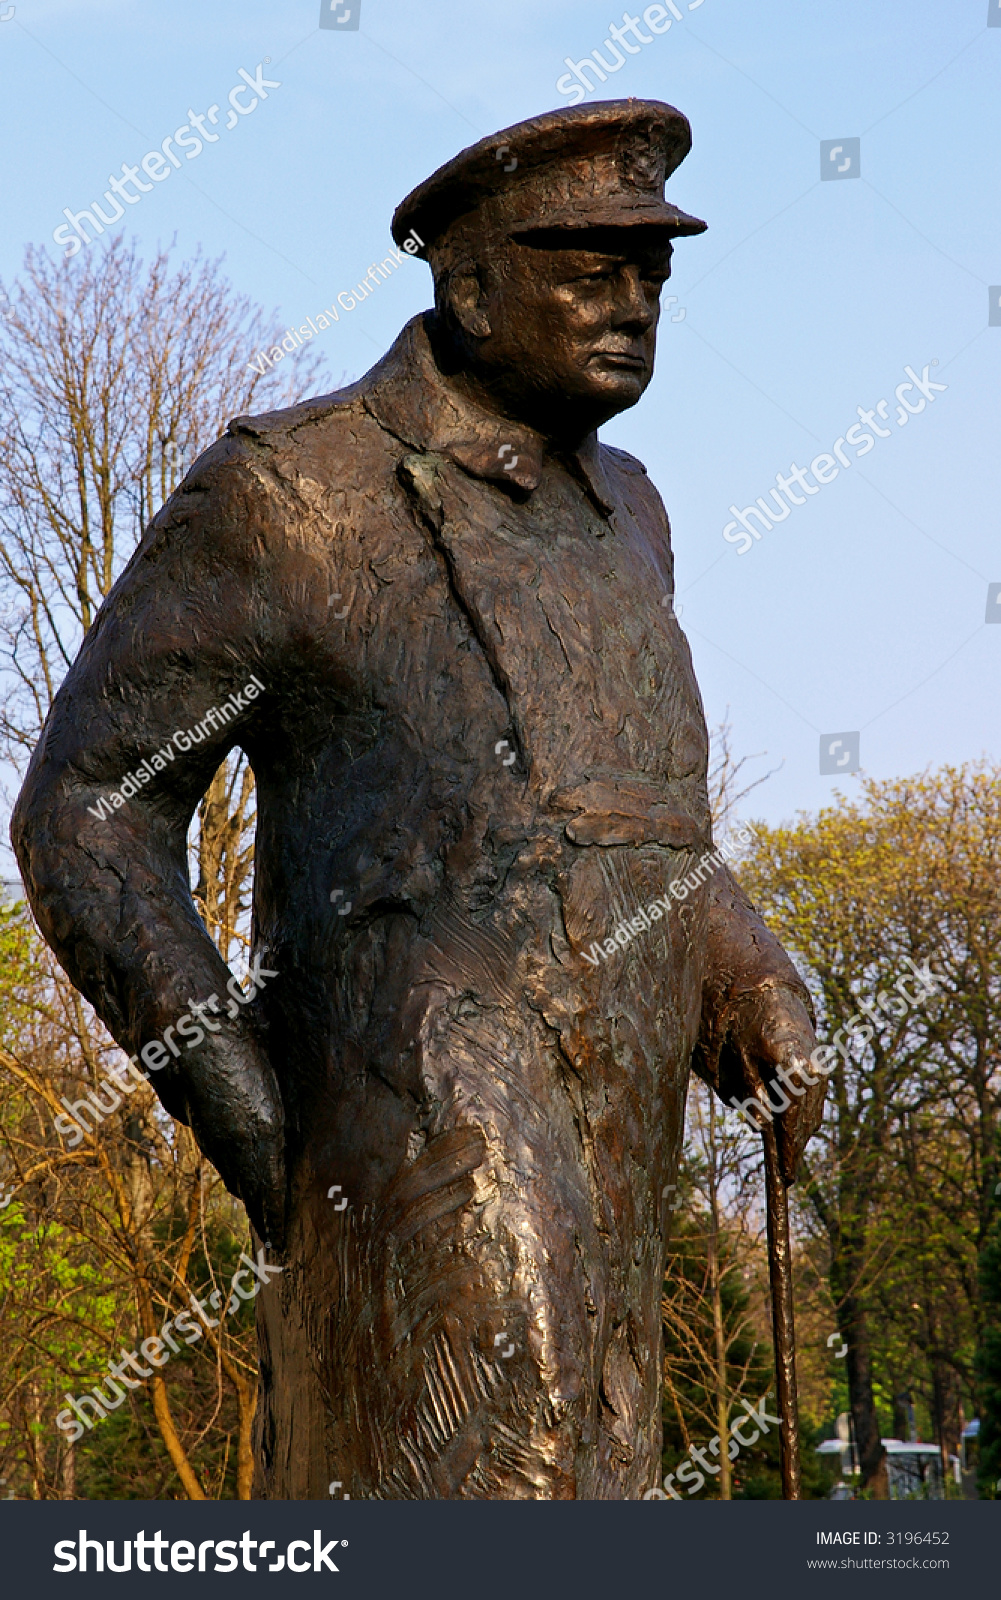 Old Bronze Statue Sir Winston Churchill Stock Photo 3196452 - Shutterstock